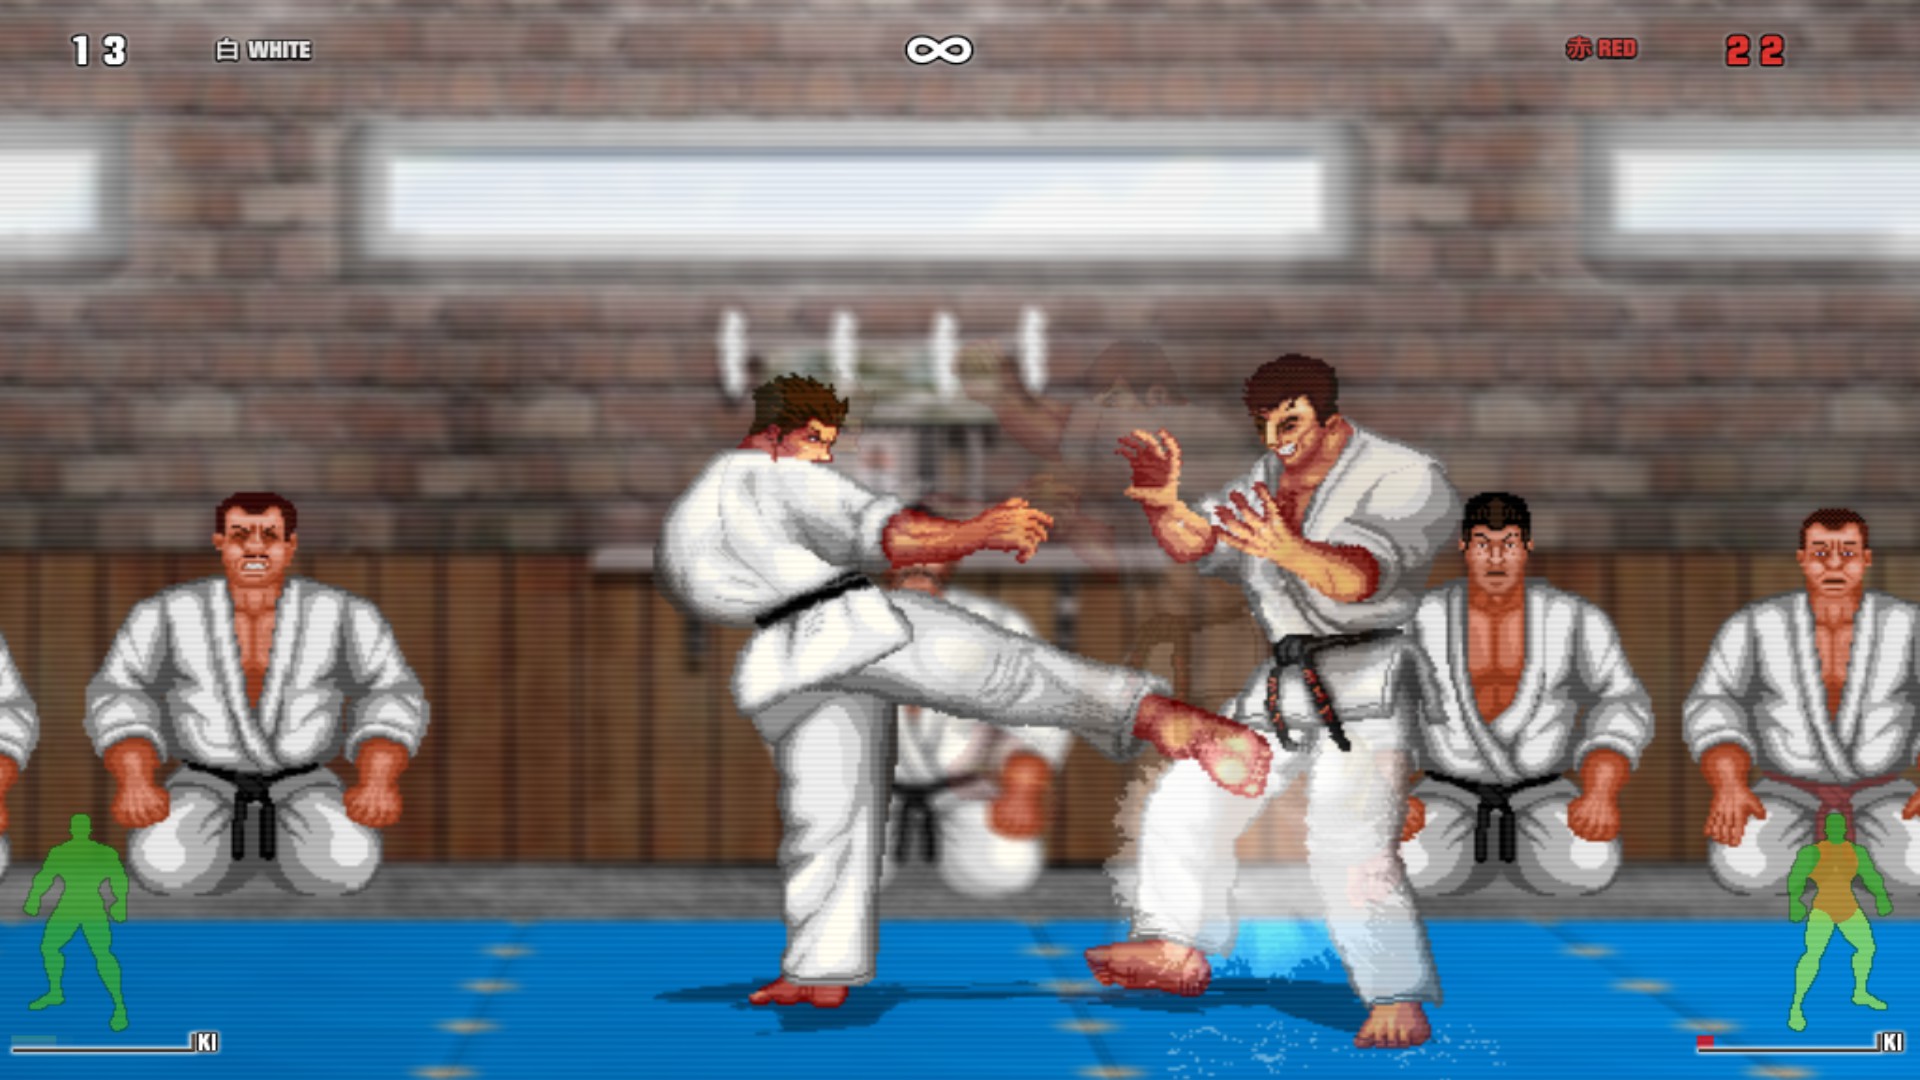 Karate Master 2 Knock Down Blow HD wallpapers, Desktop wallpaper - most viewed